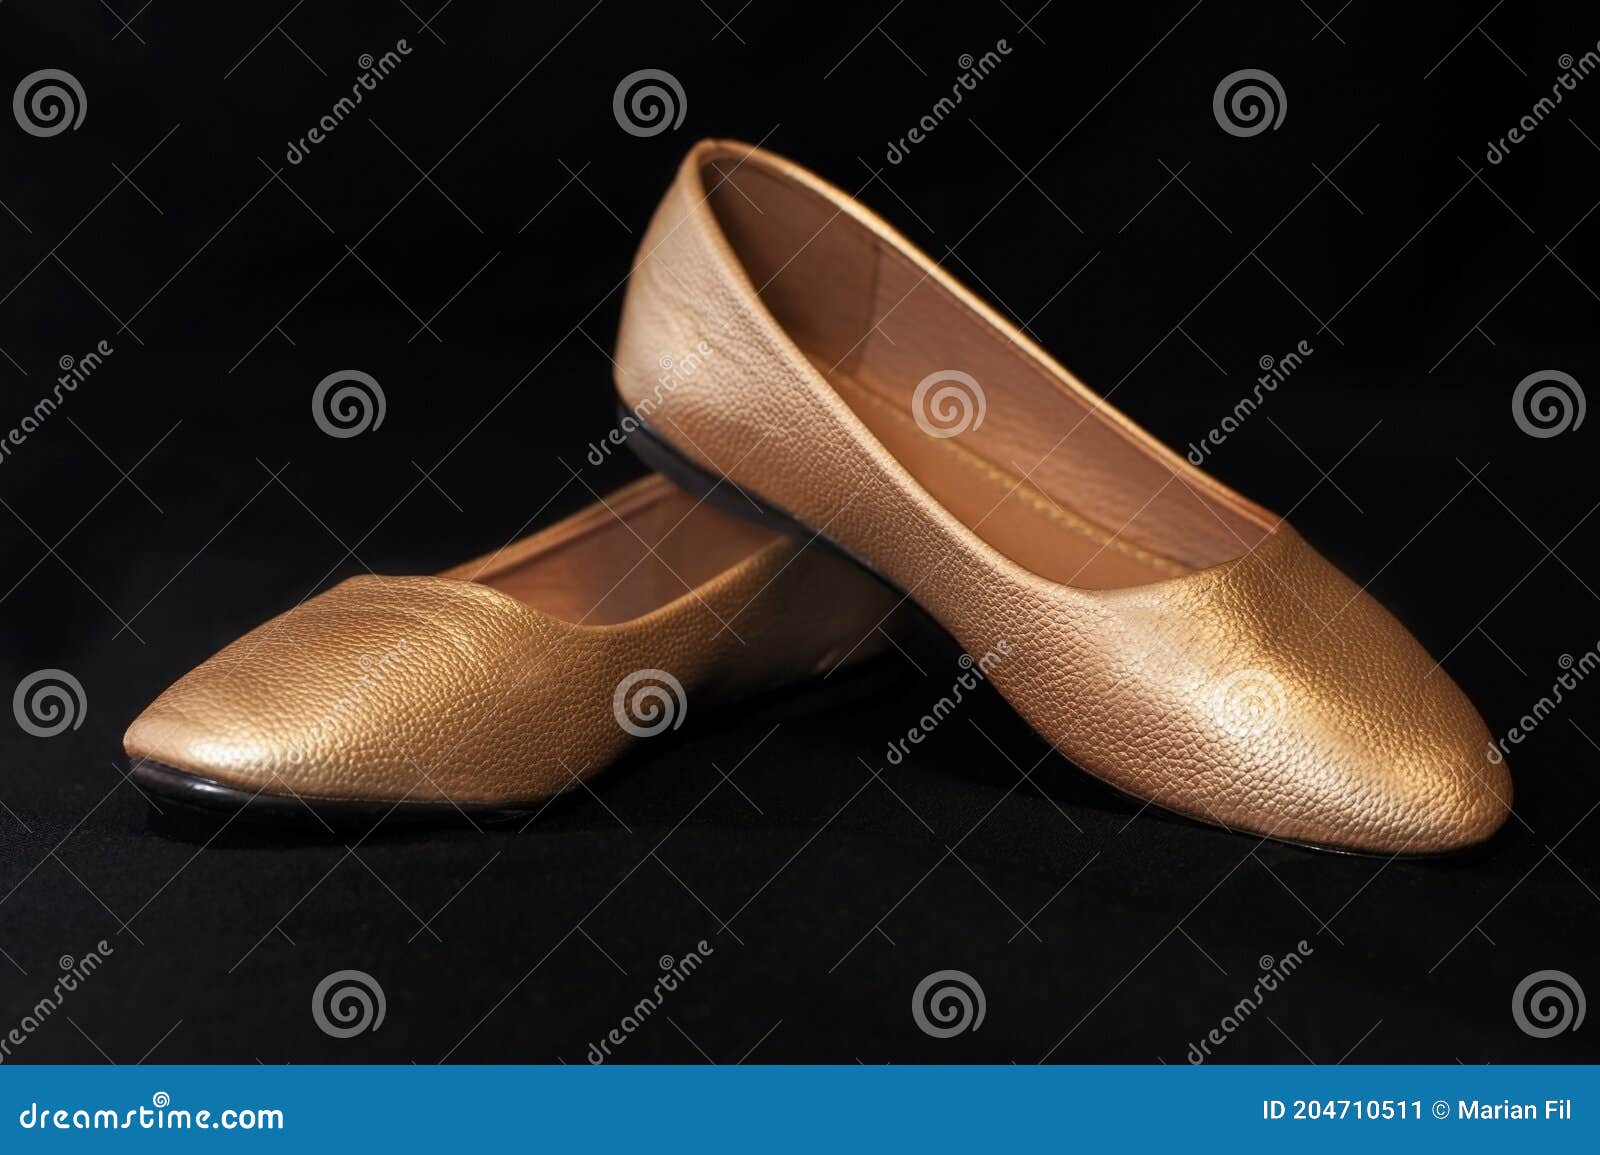 Zapatos Para Niñas Cuero Sobre Fondo Color Dorado de archivo - Imagen de modelo, ropa: 204710511